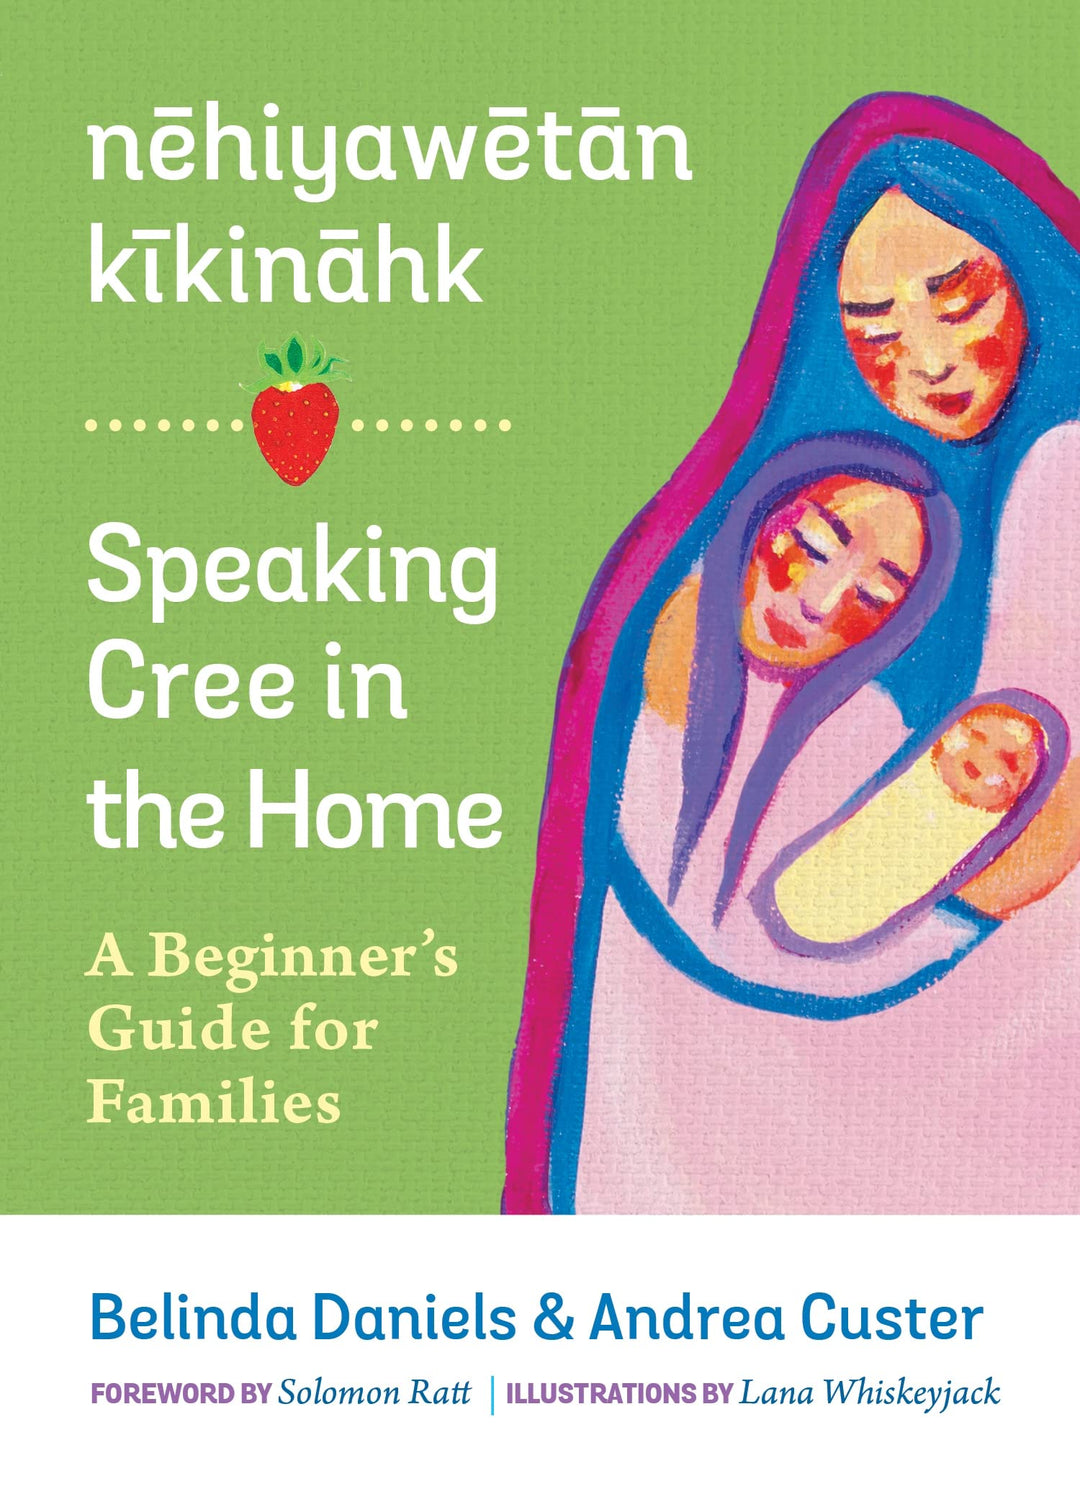 Nehiyawetan Kikinahk? Speaking Cree in the Home: A Beginner's Guide for Families by Belinda Daniels & Andrea Custer